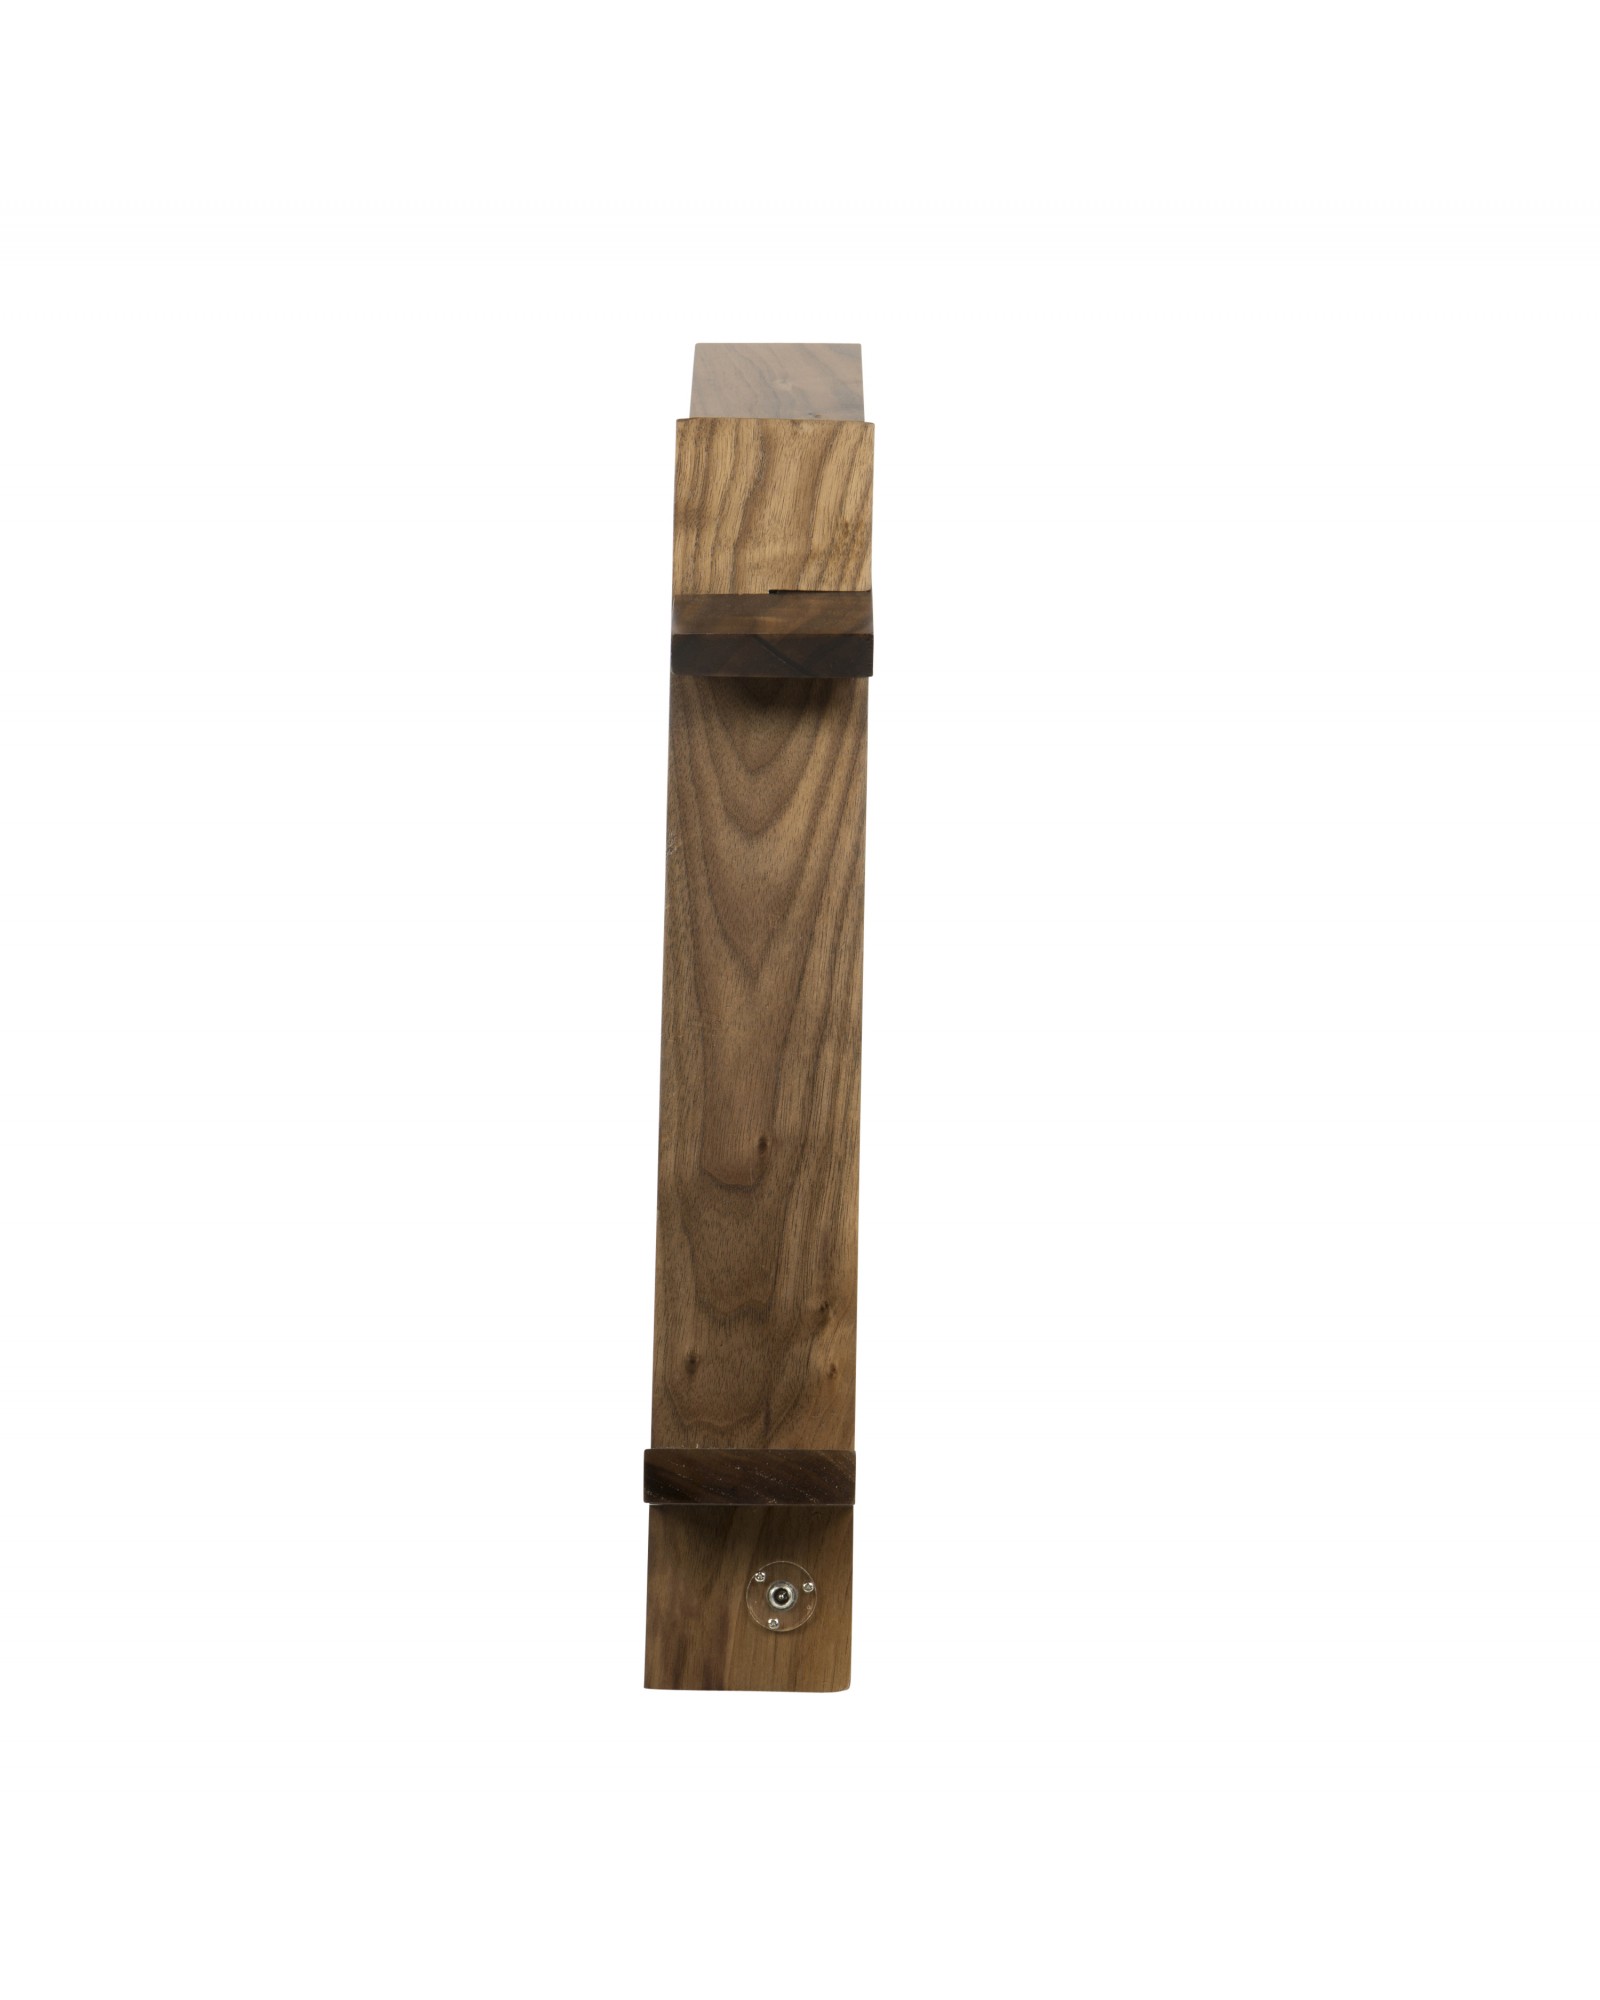 Plank Contemporary Desk Lamp in Walnut